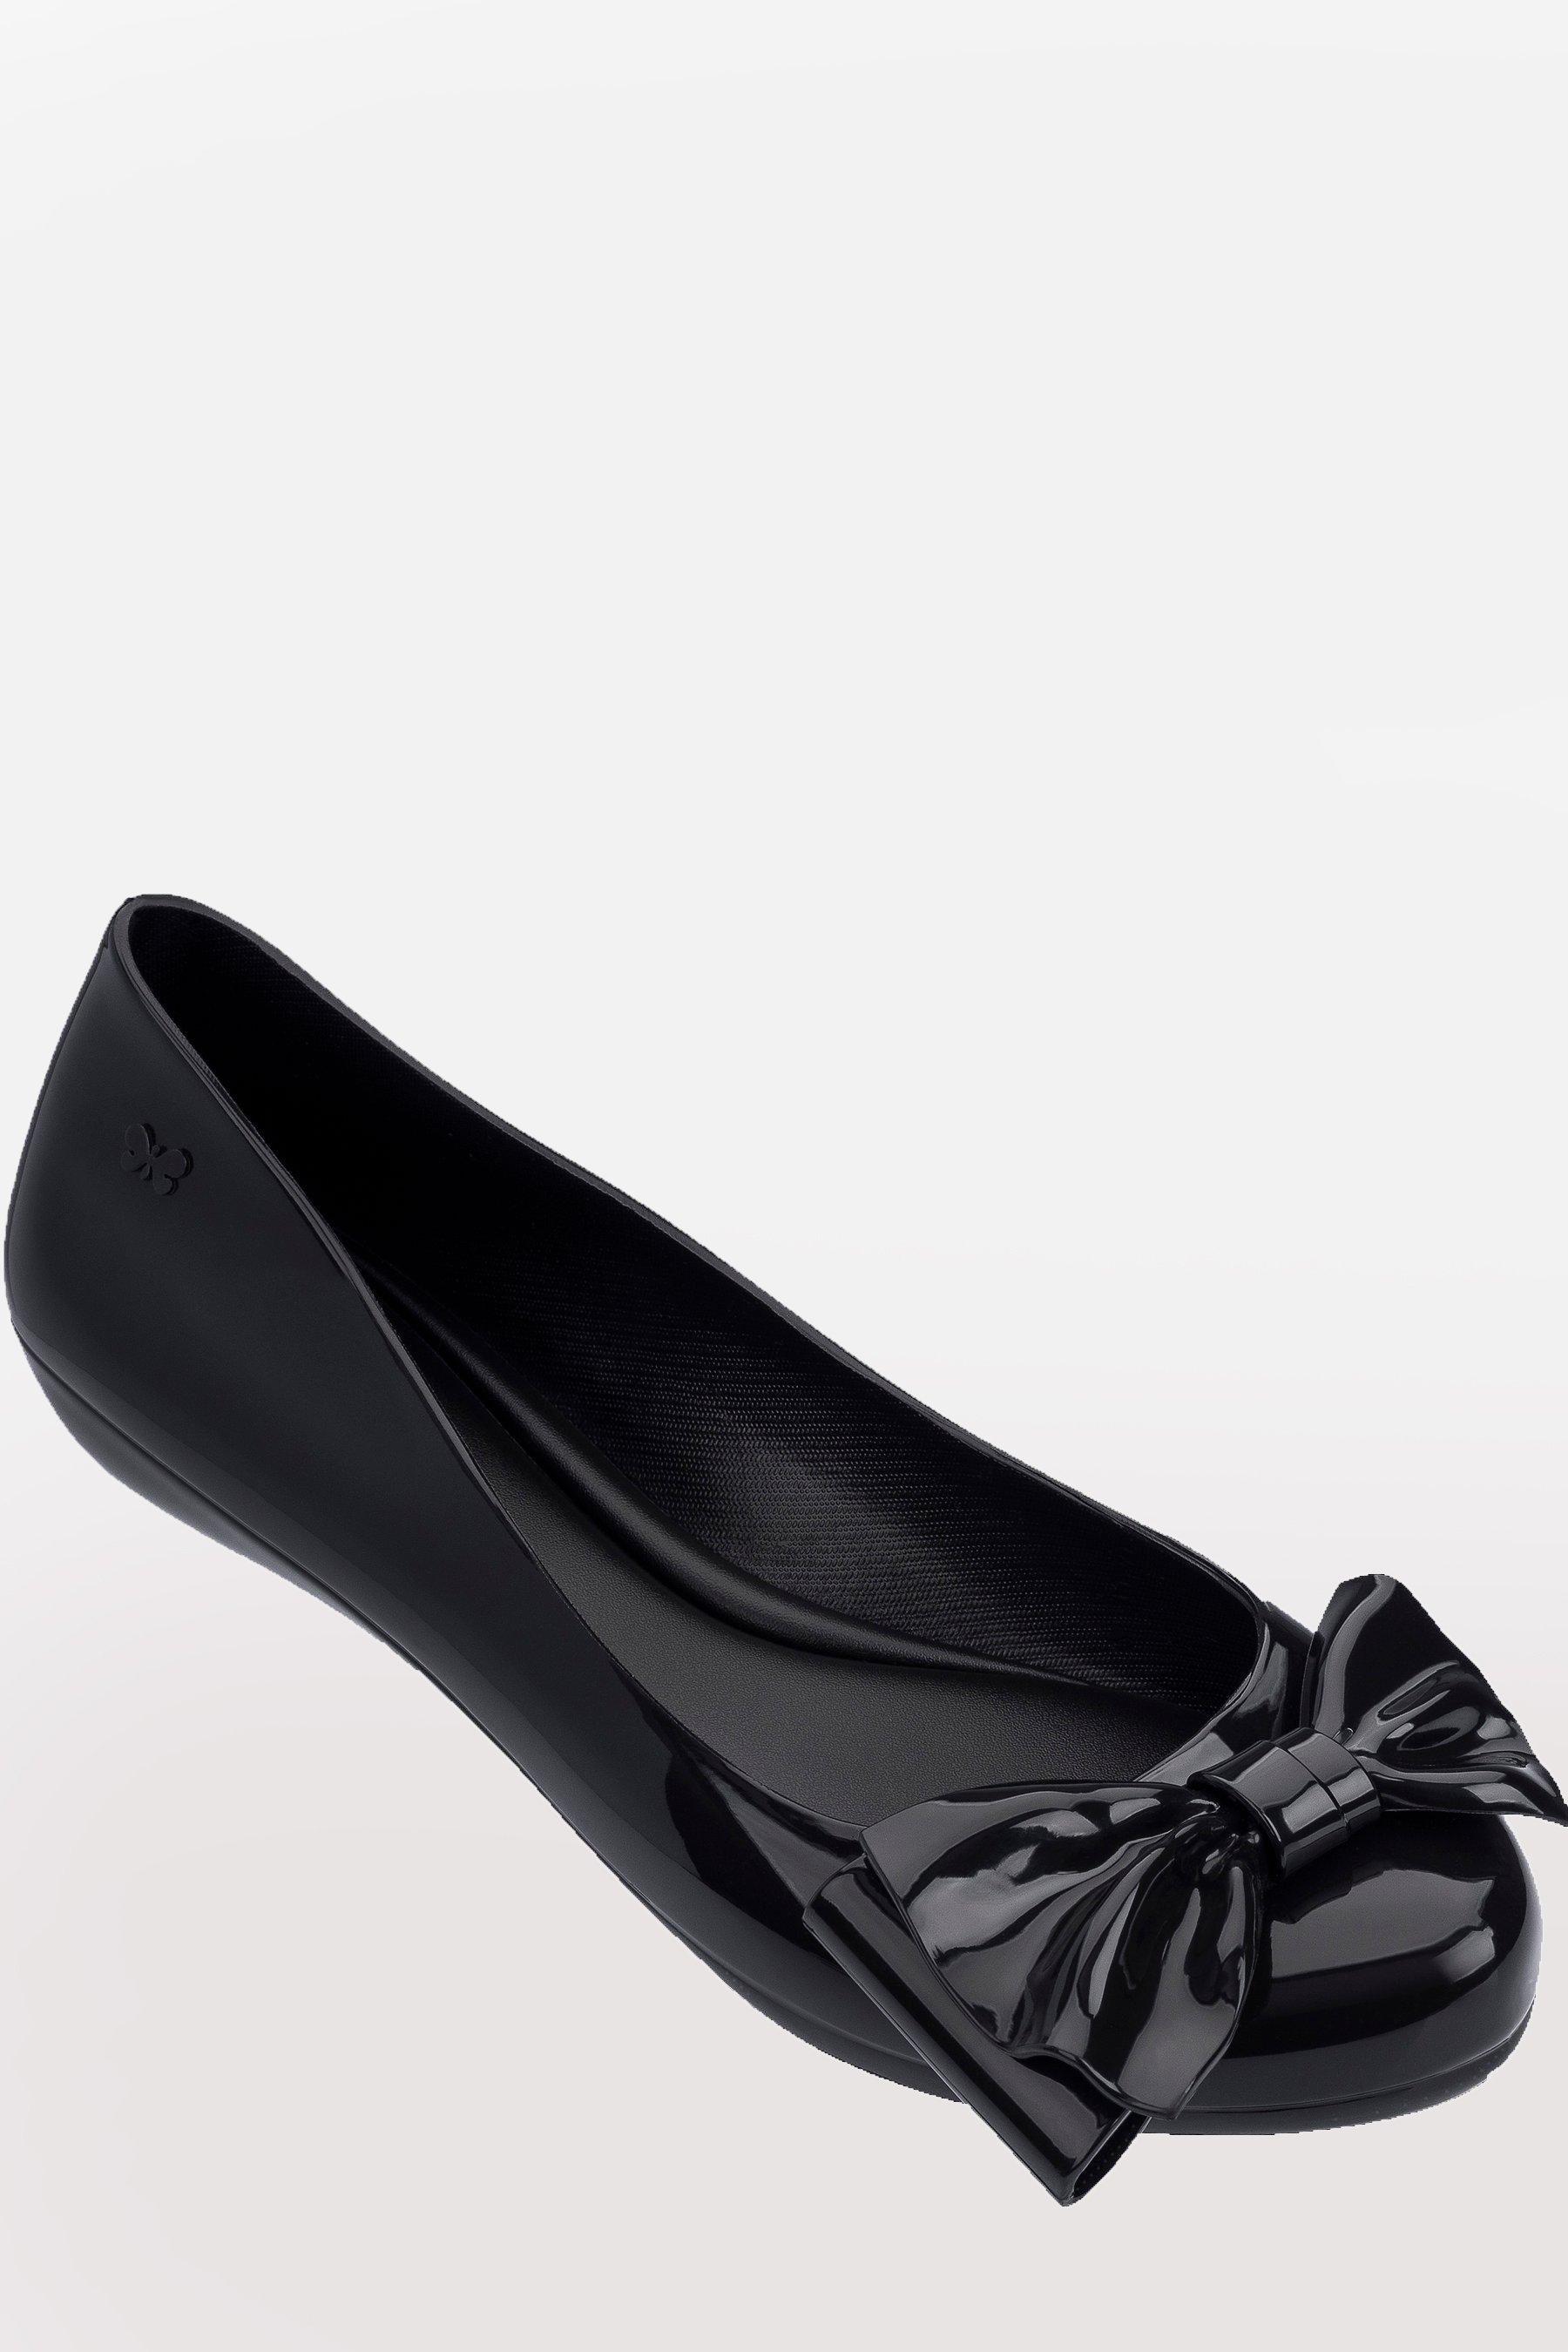 zaxy shoes pop bow 3 black